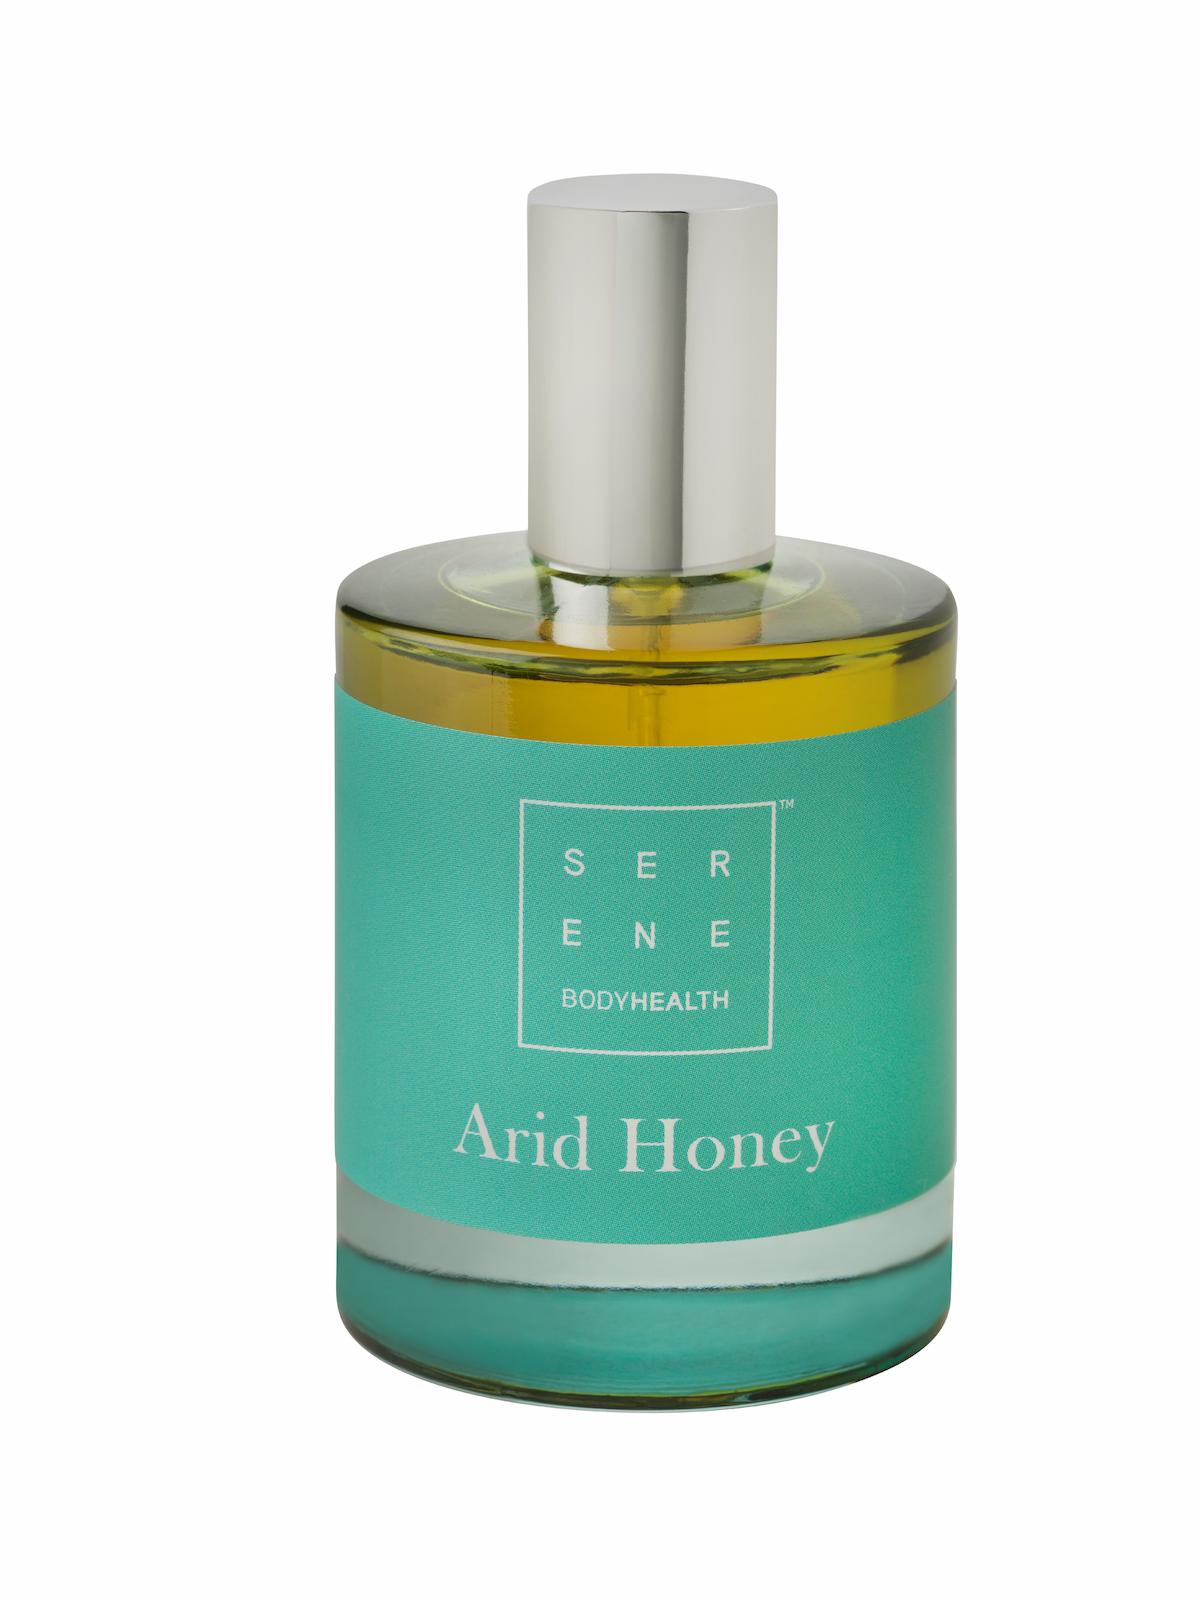 Serene Body Health Arid Honey Eau de Parfum 50ml